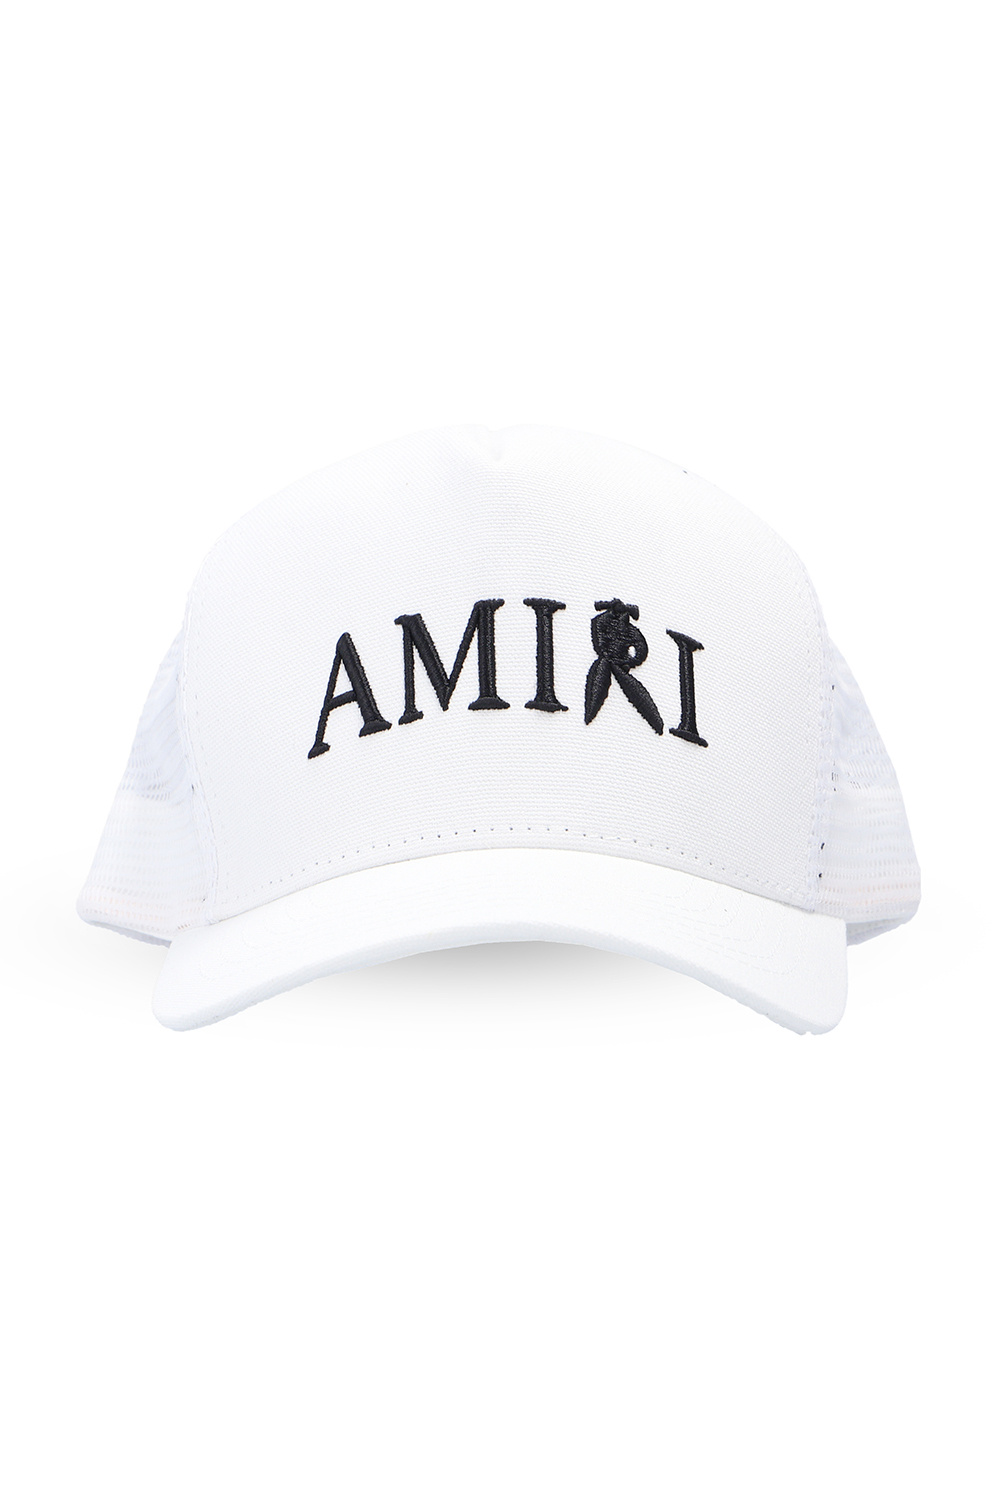 Amiri New Era Marvin Character Black A-Frame Trucker Cap 60141582